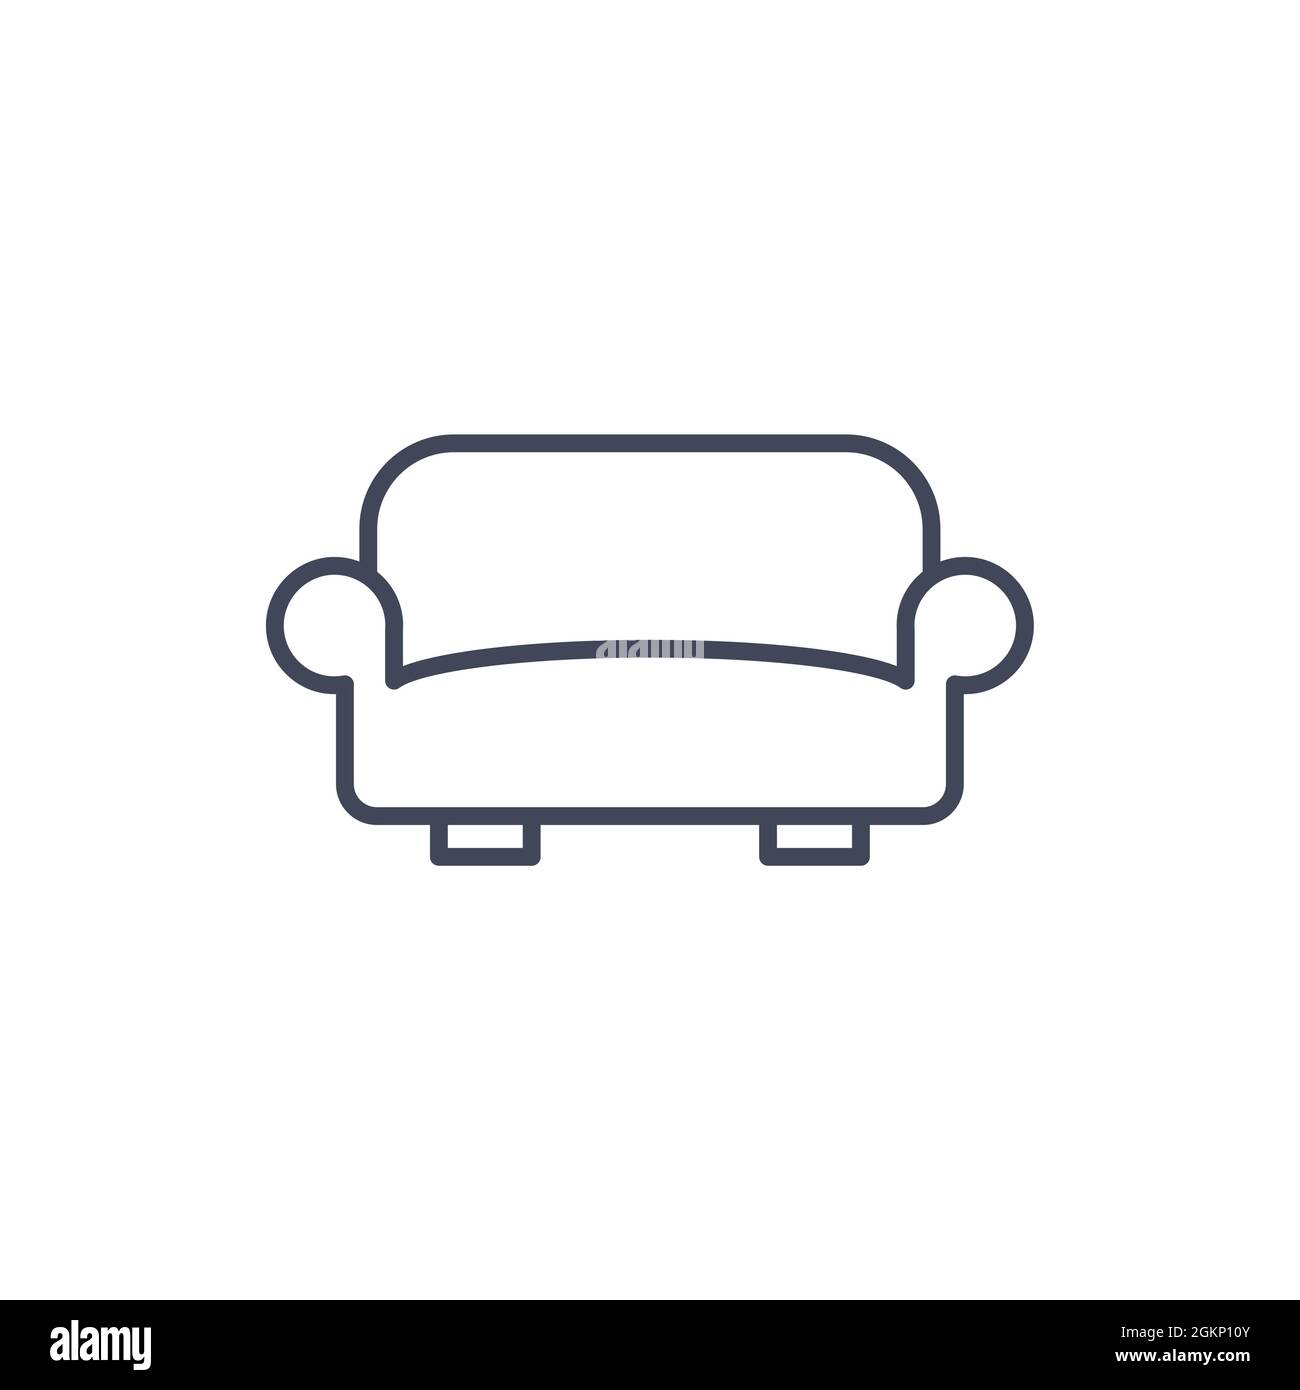 Sofa line icon pictogram. Outline sofa home lounge furniture icon Stock Vector